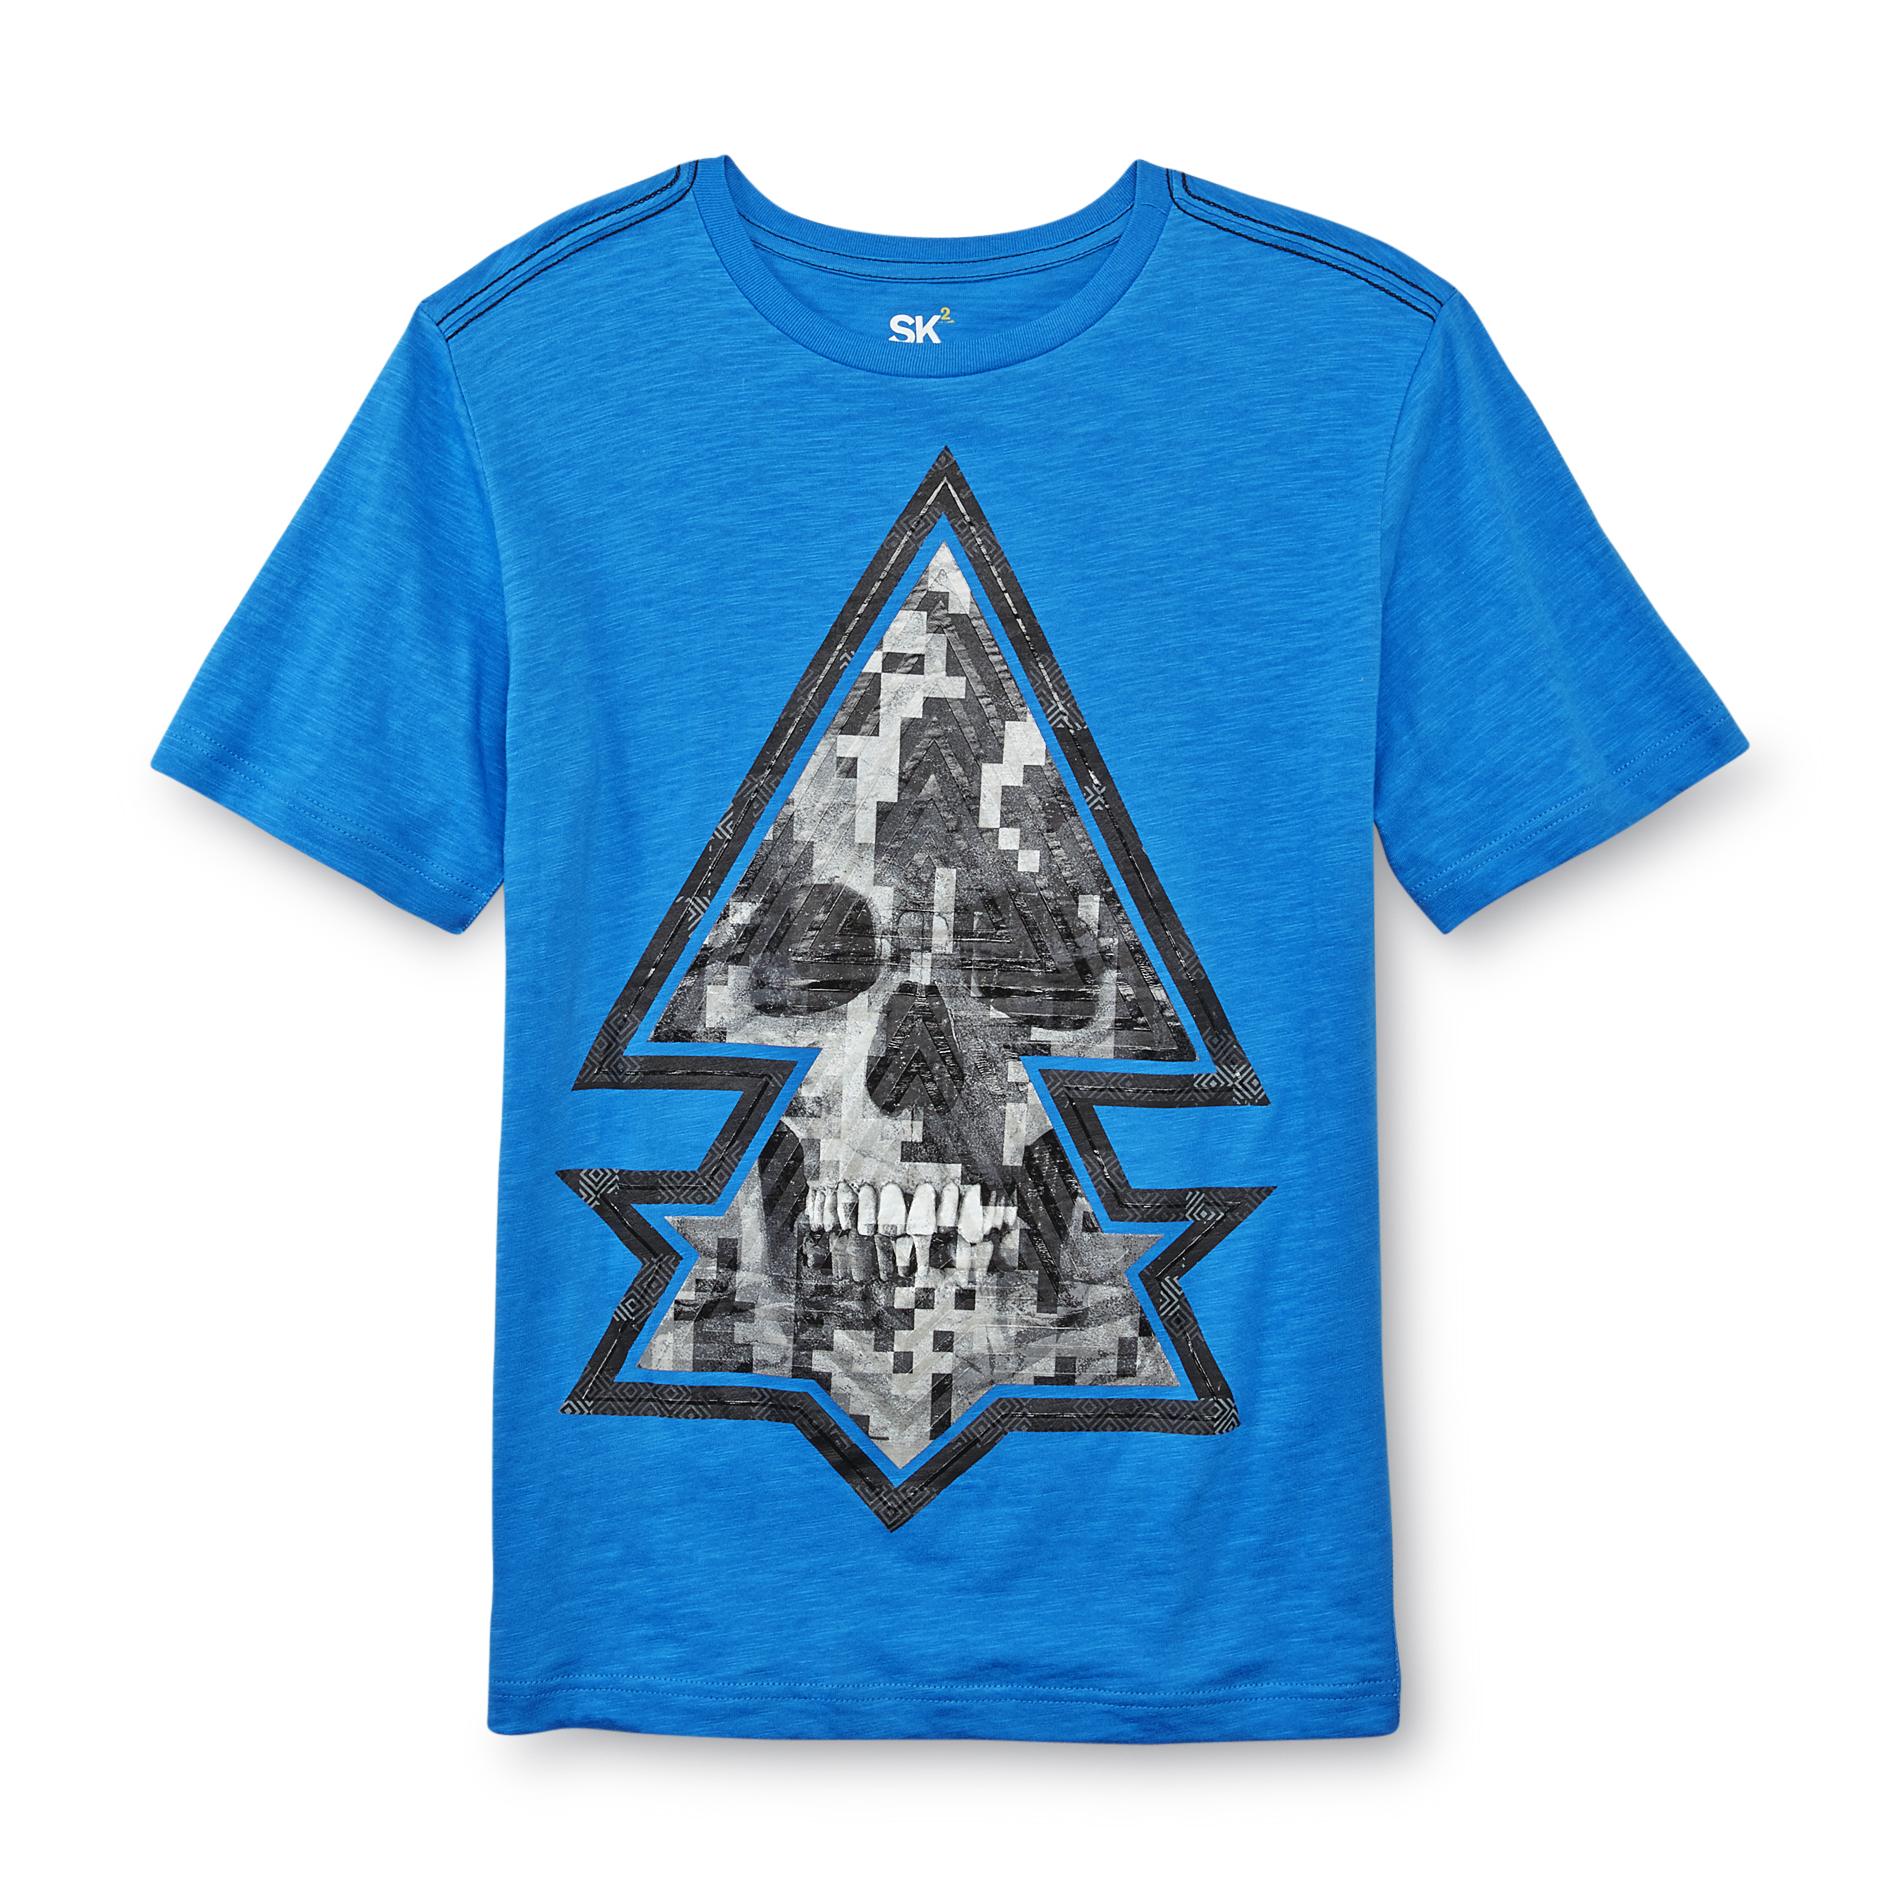 SK2 Boy's Graphic T-Shirt - Skull